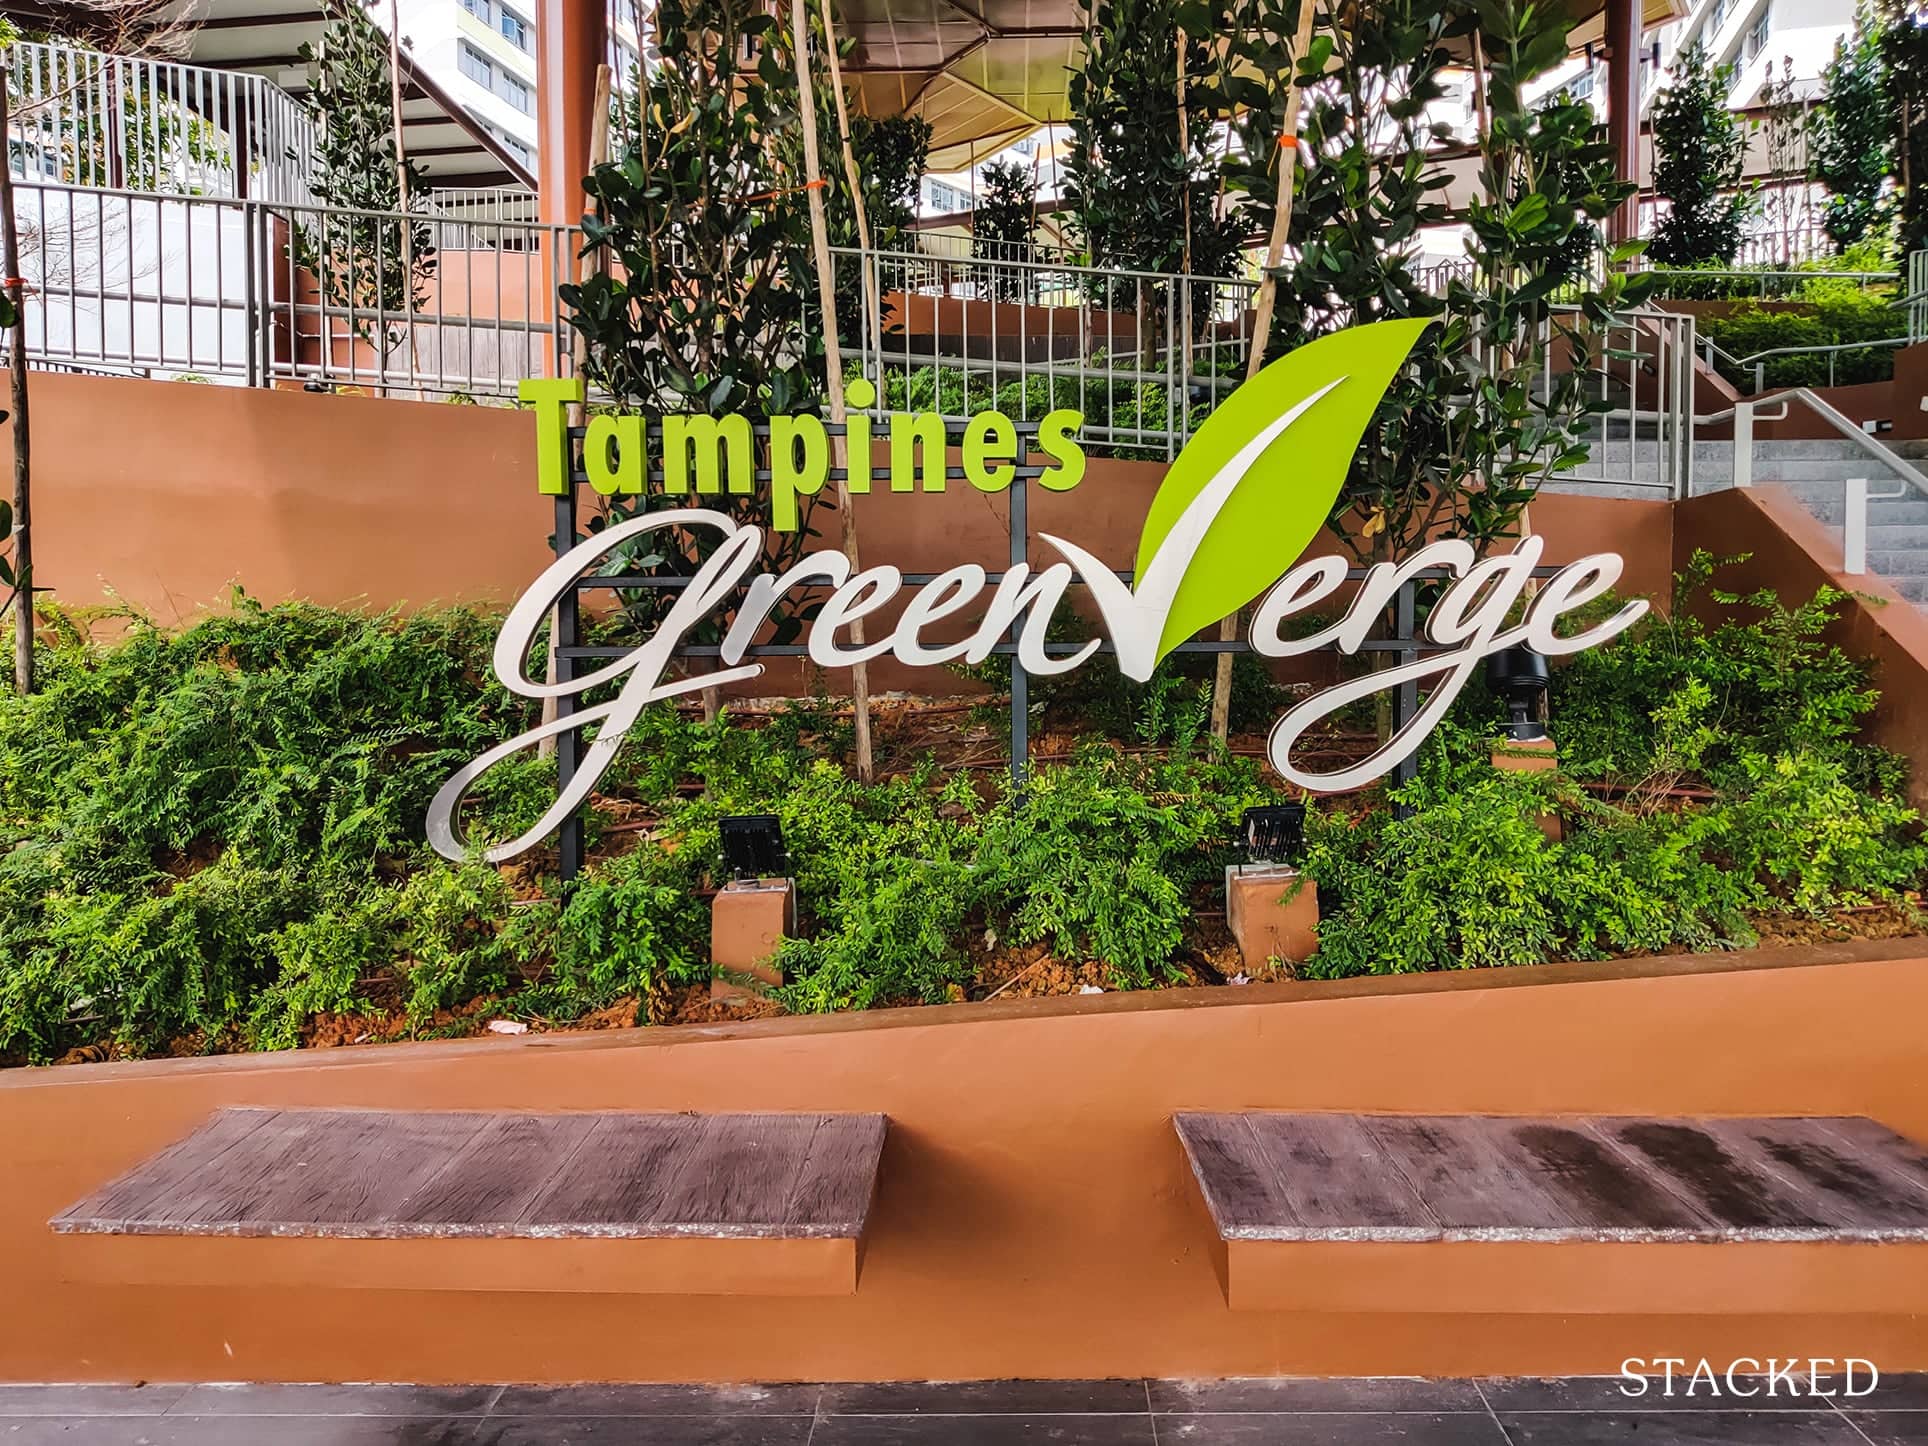 Tampines GreenVerge signage